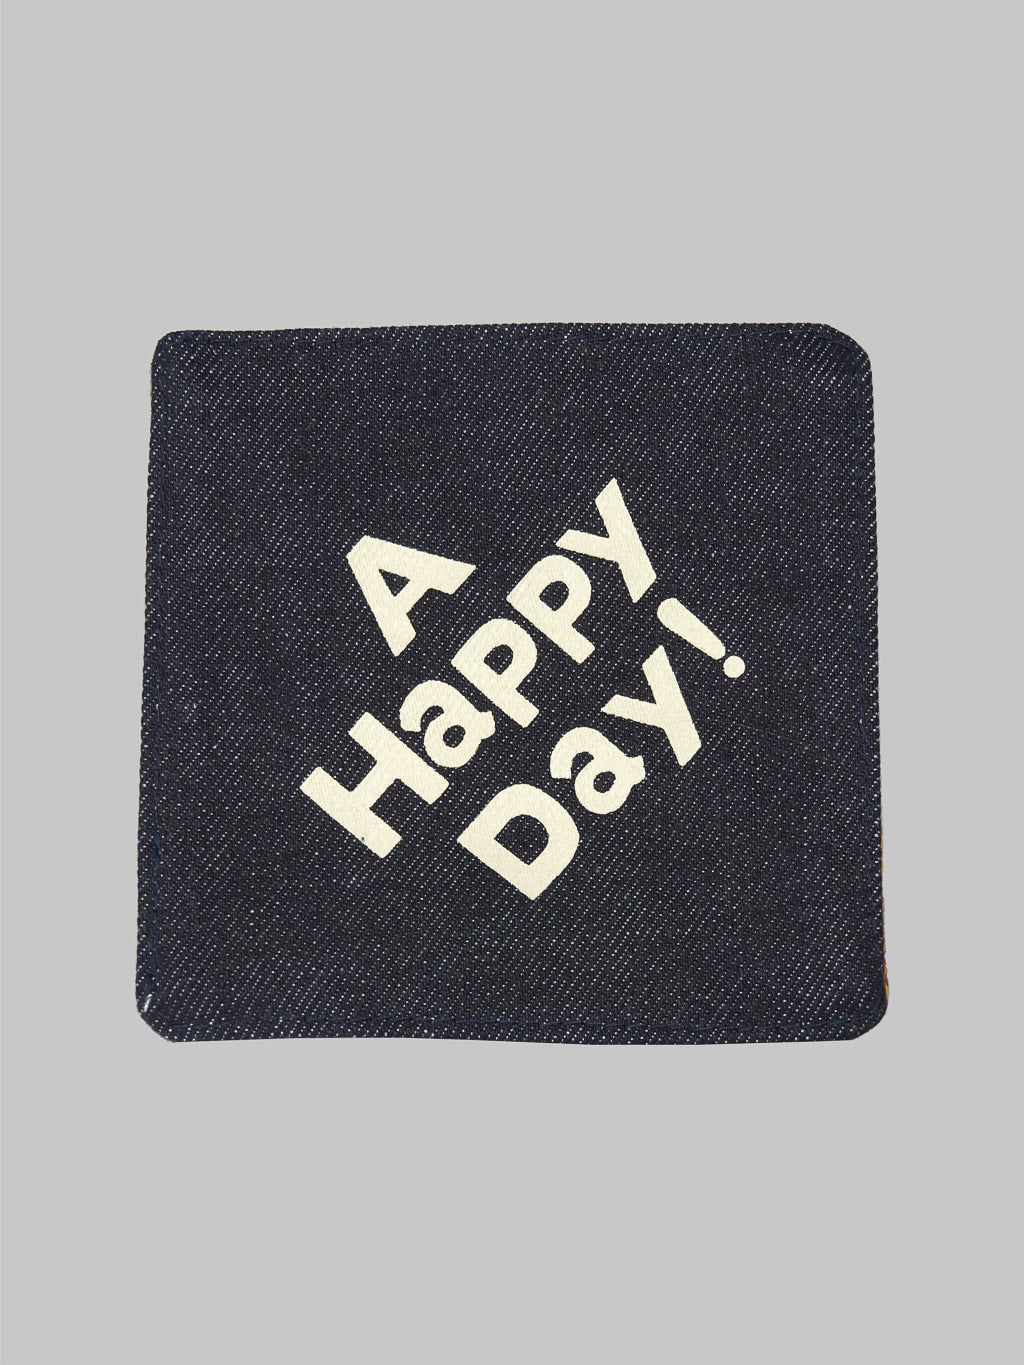 UES Denim "Happy Day" Coaster